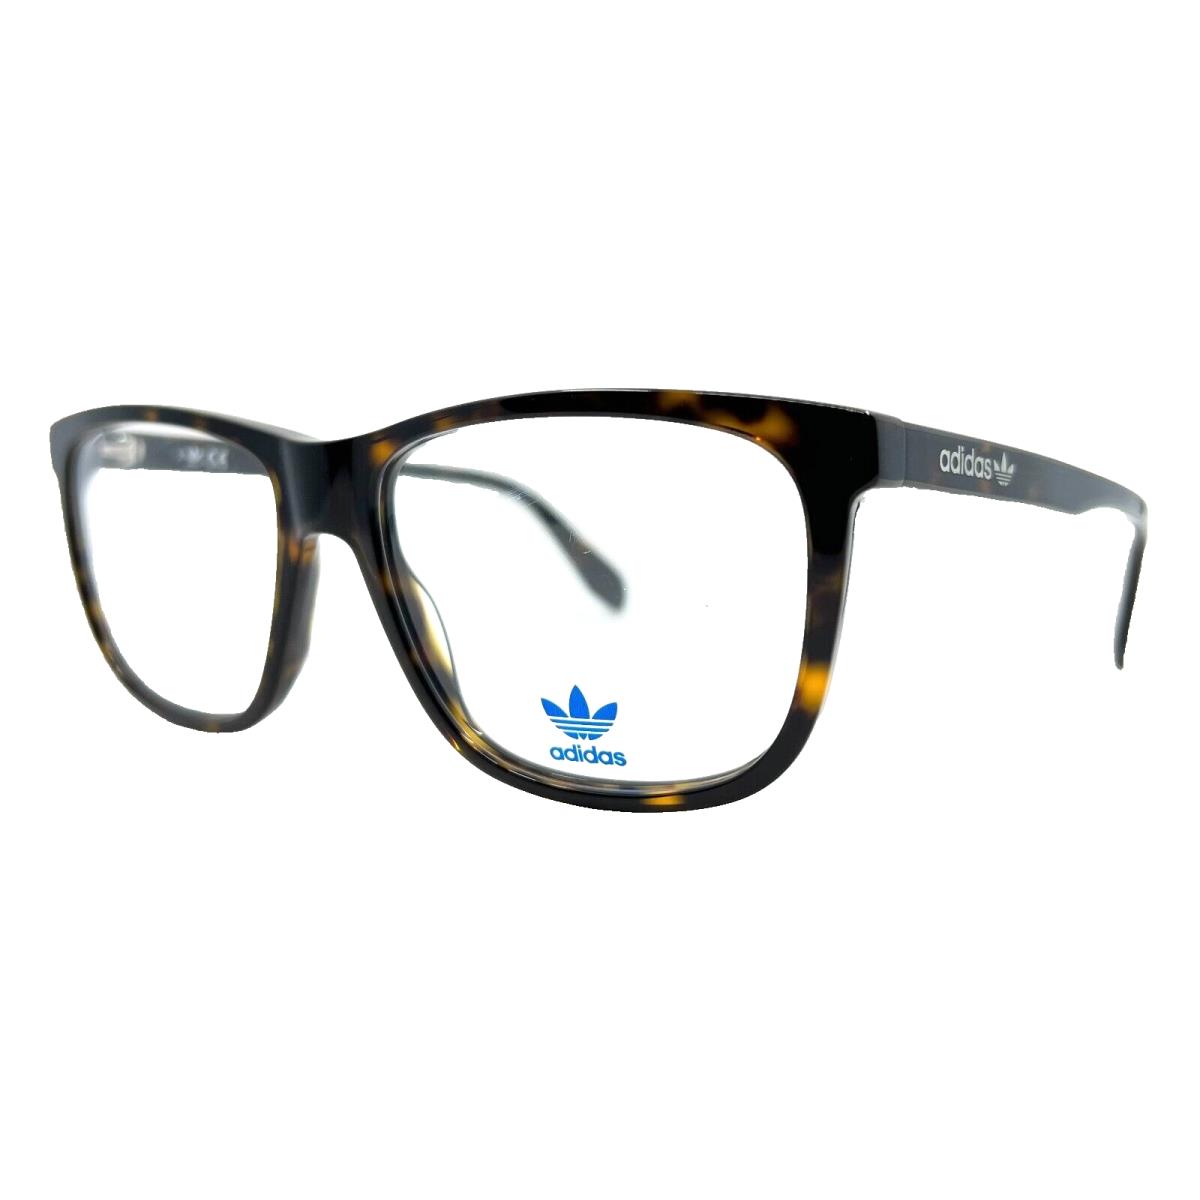 Adidas Originals - OR5012 052 56/16/145 - Tort - Eyeglasses Case